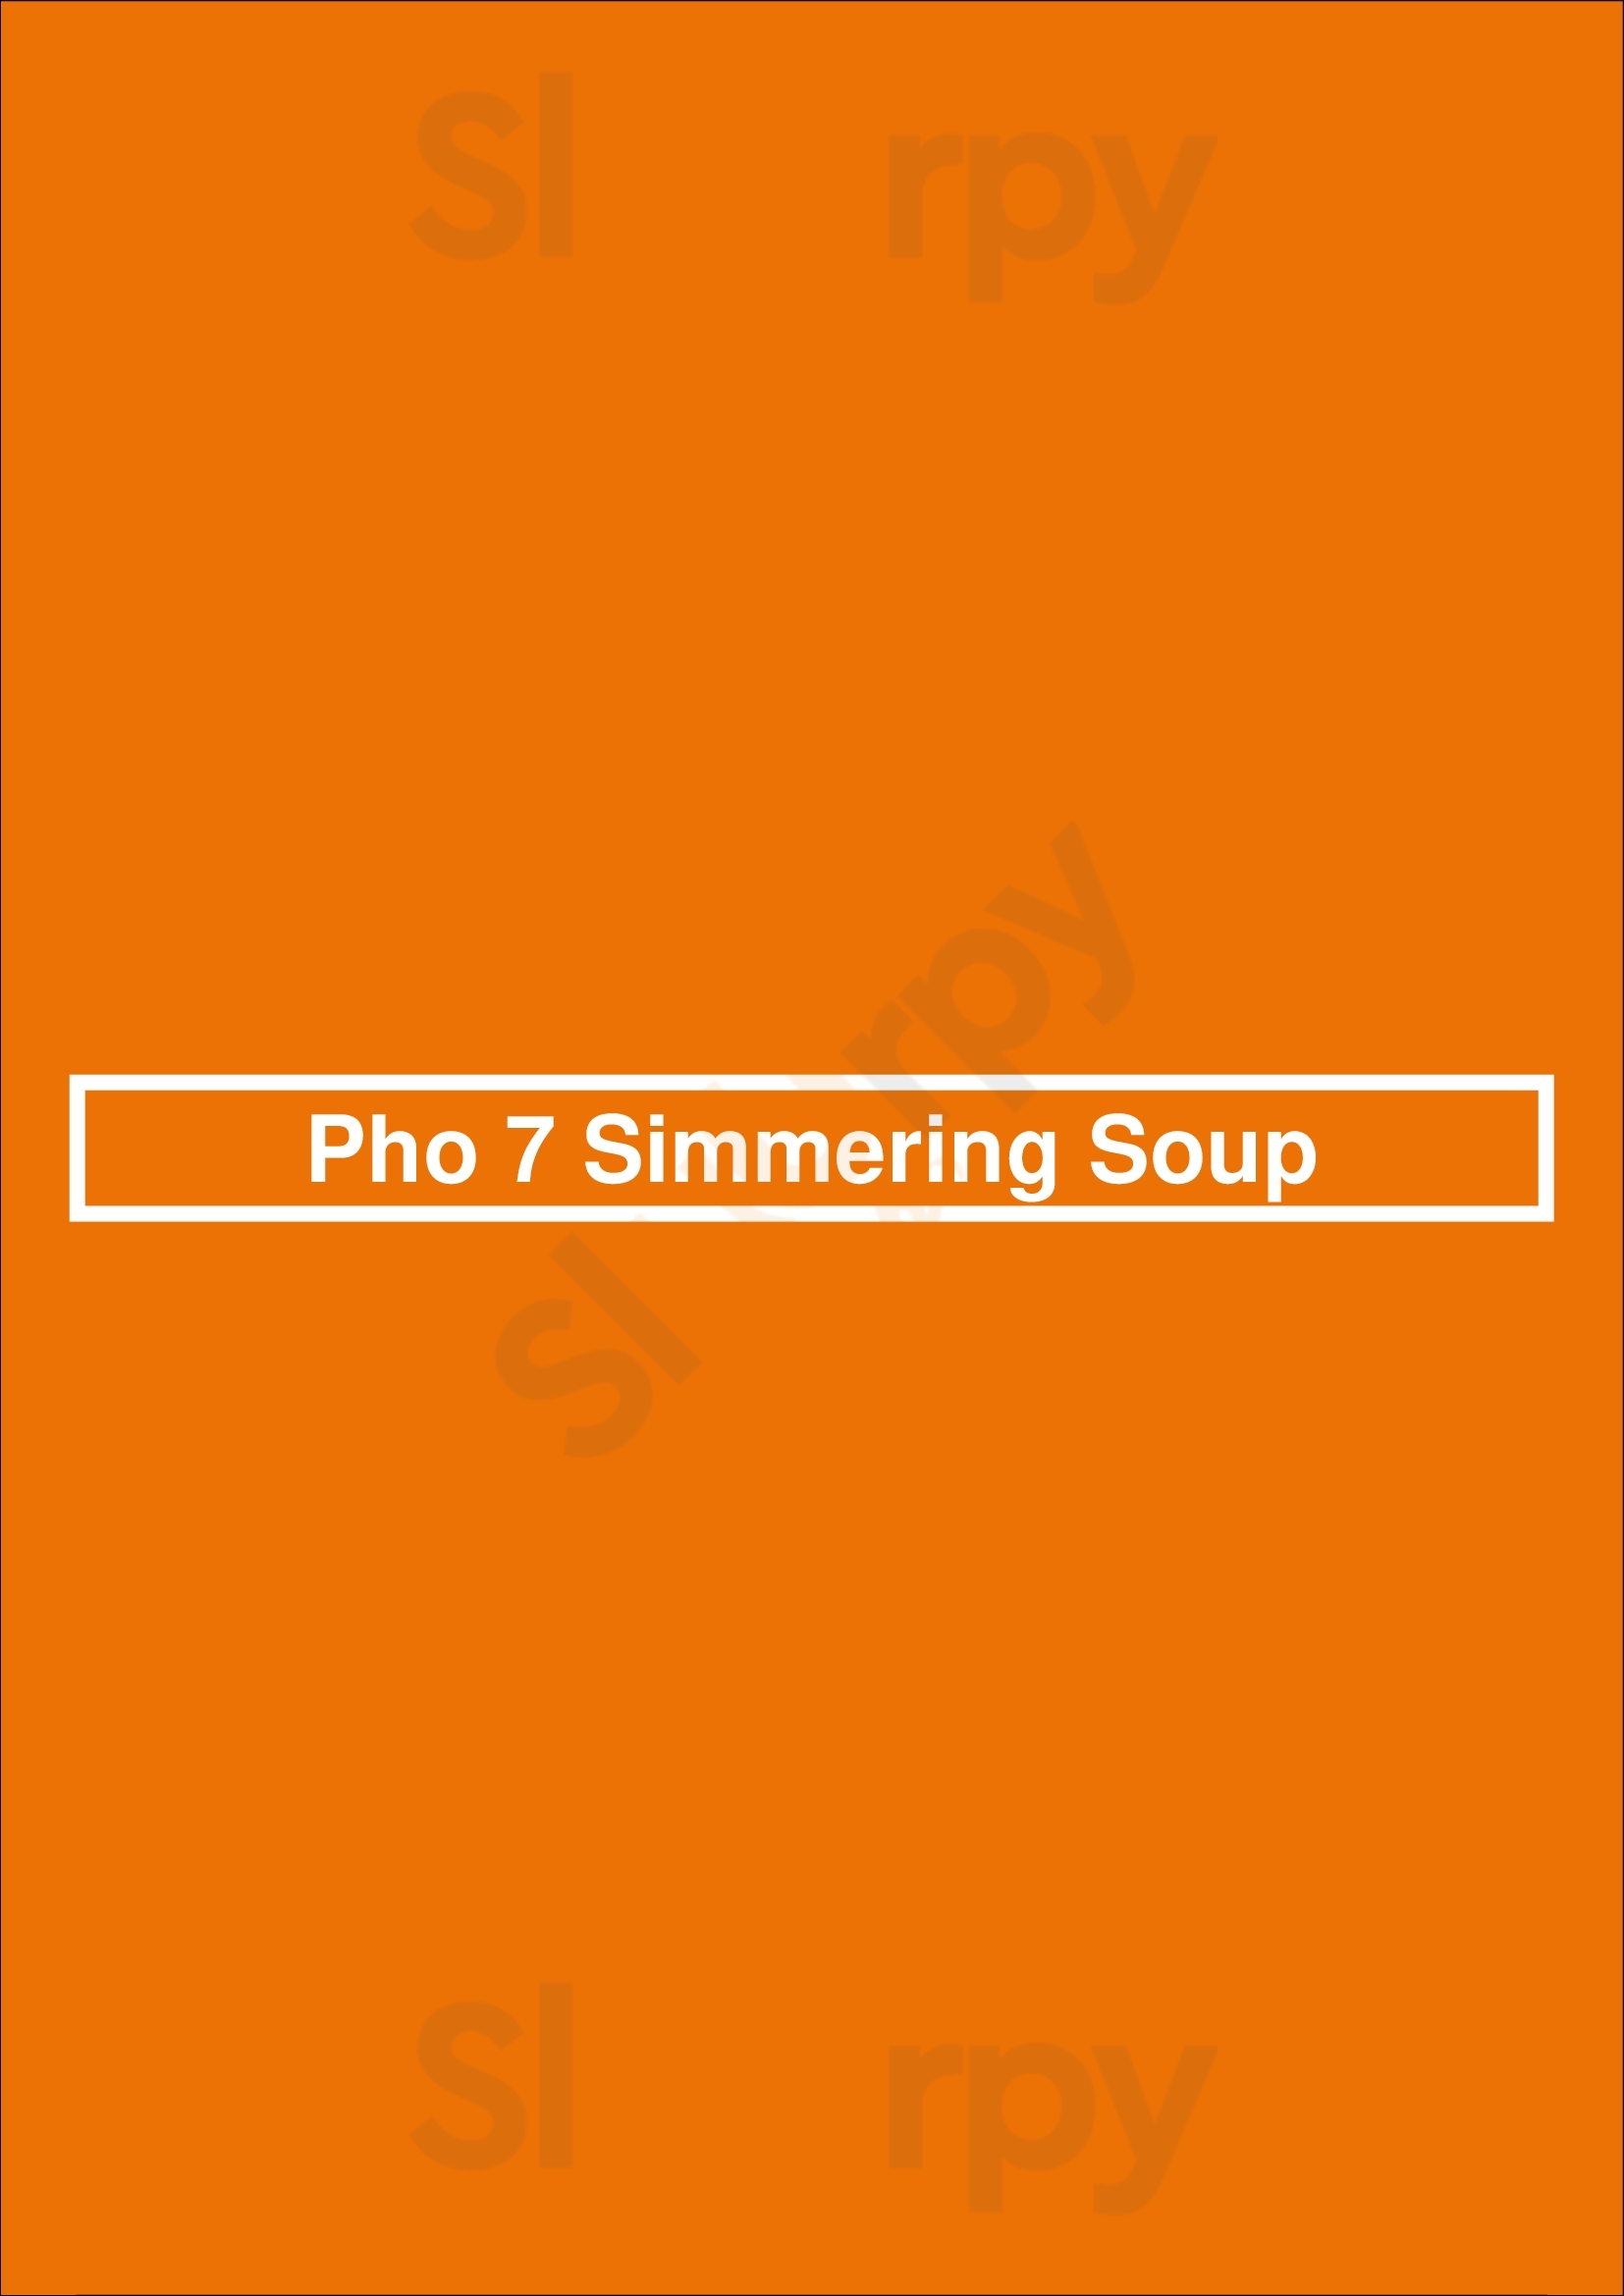 Pho 7 Simmering Soup Kent Menu - 1